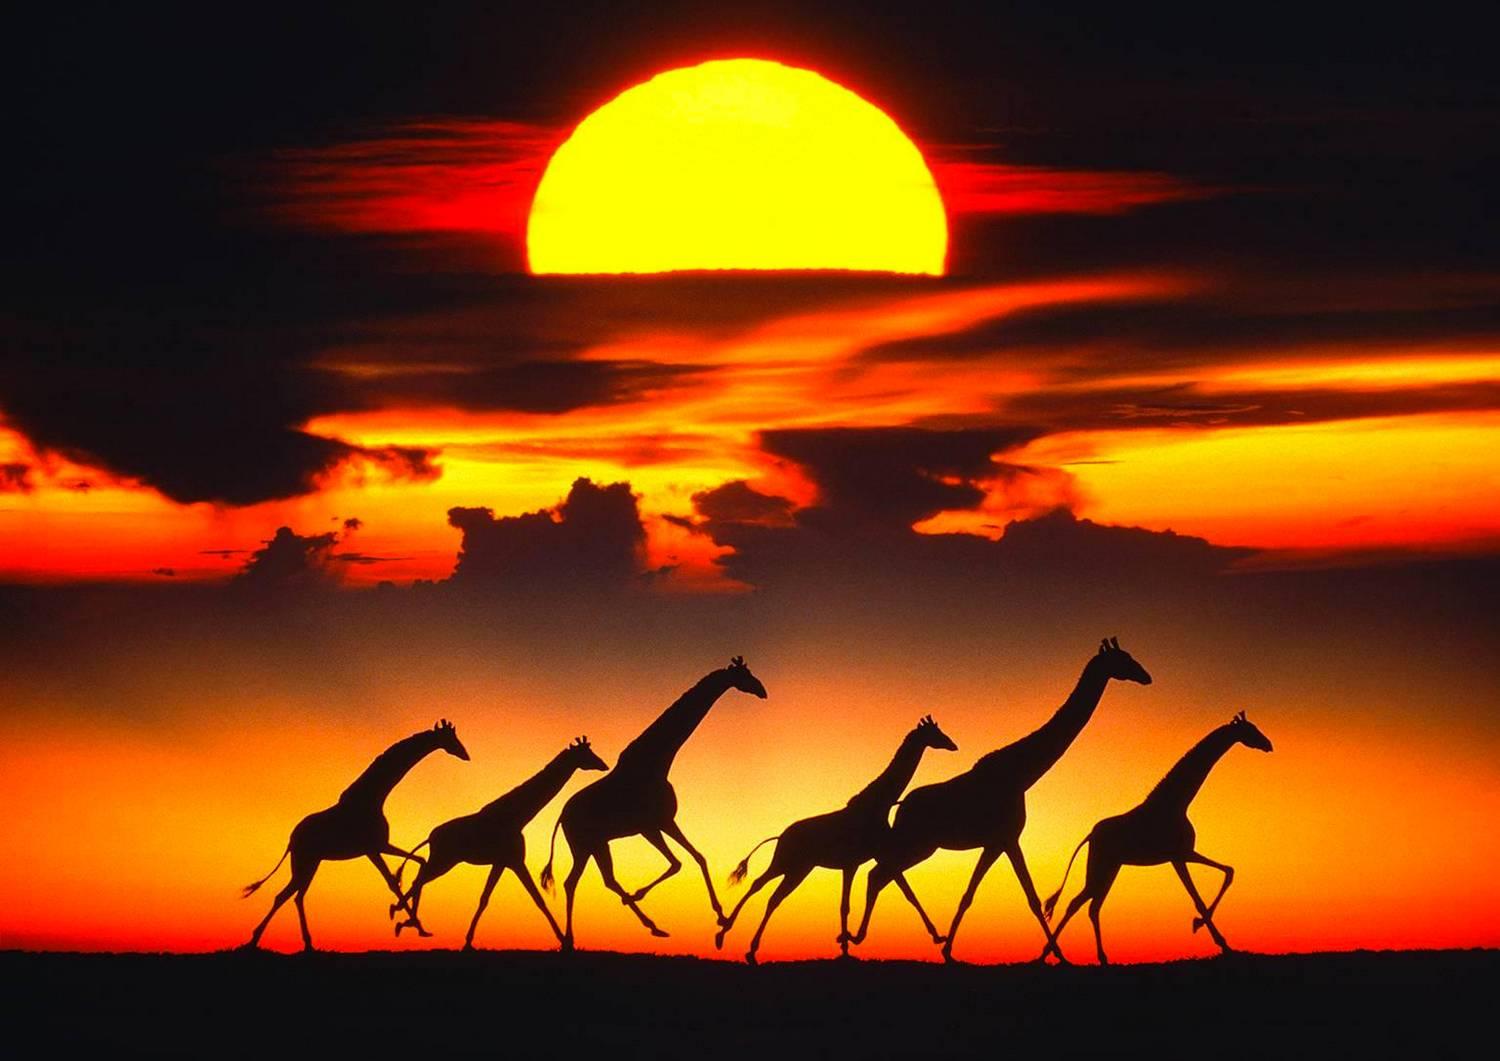 Color Photograph Mitchell Funk - savanna africaine, girafes au coucher du soleil 